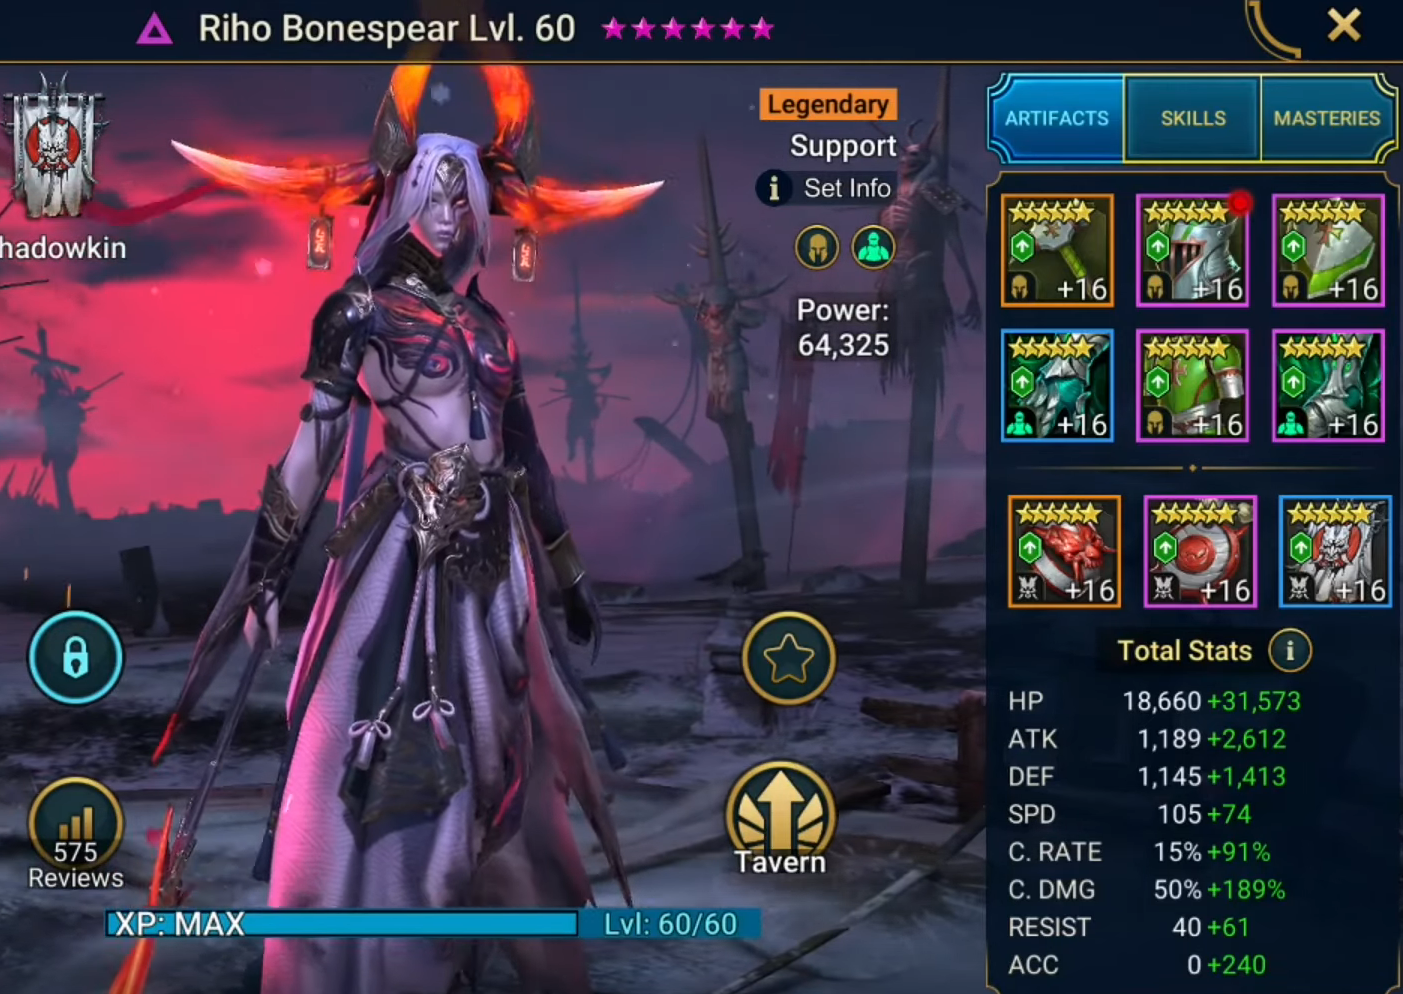 Riho Bonespear clan boss gear and stats